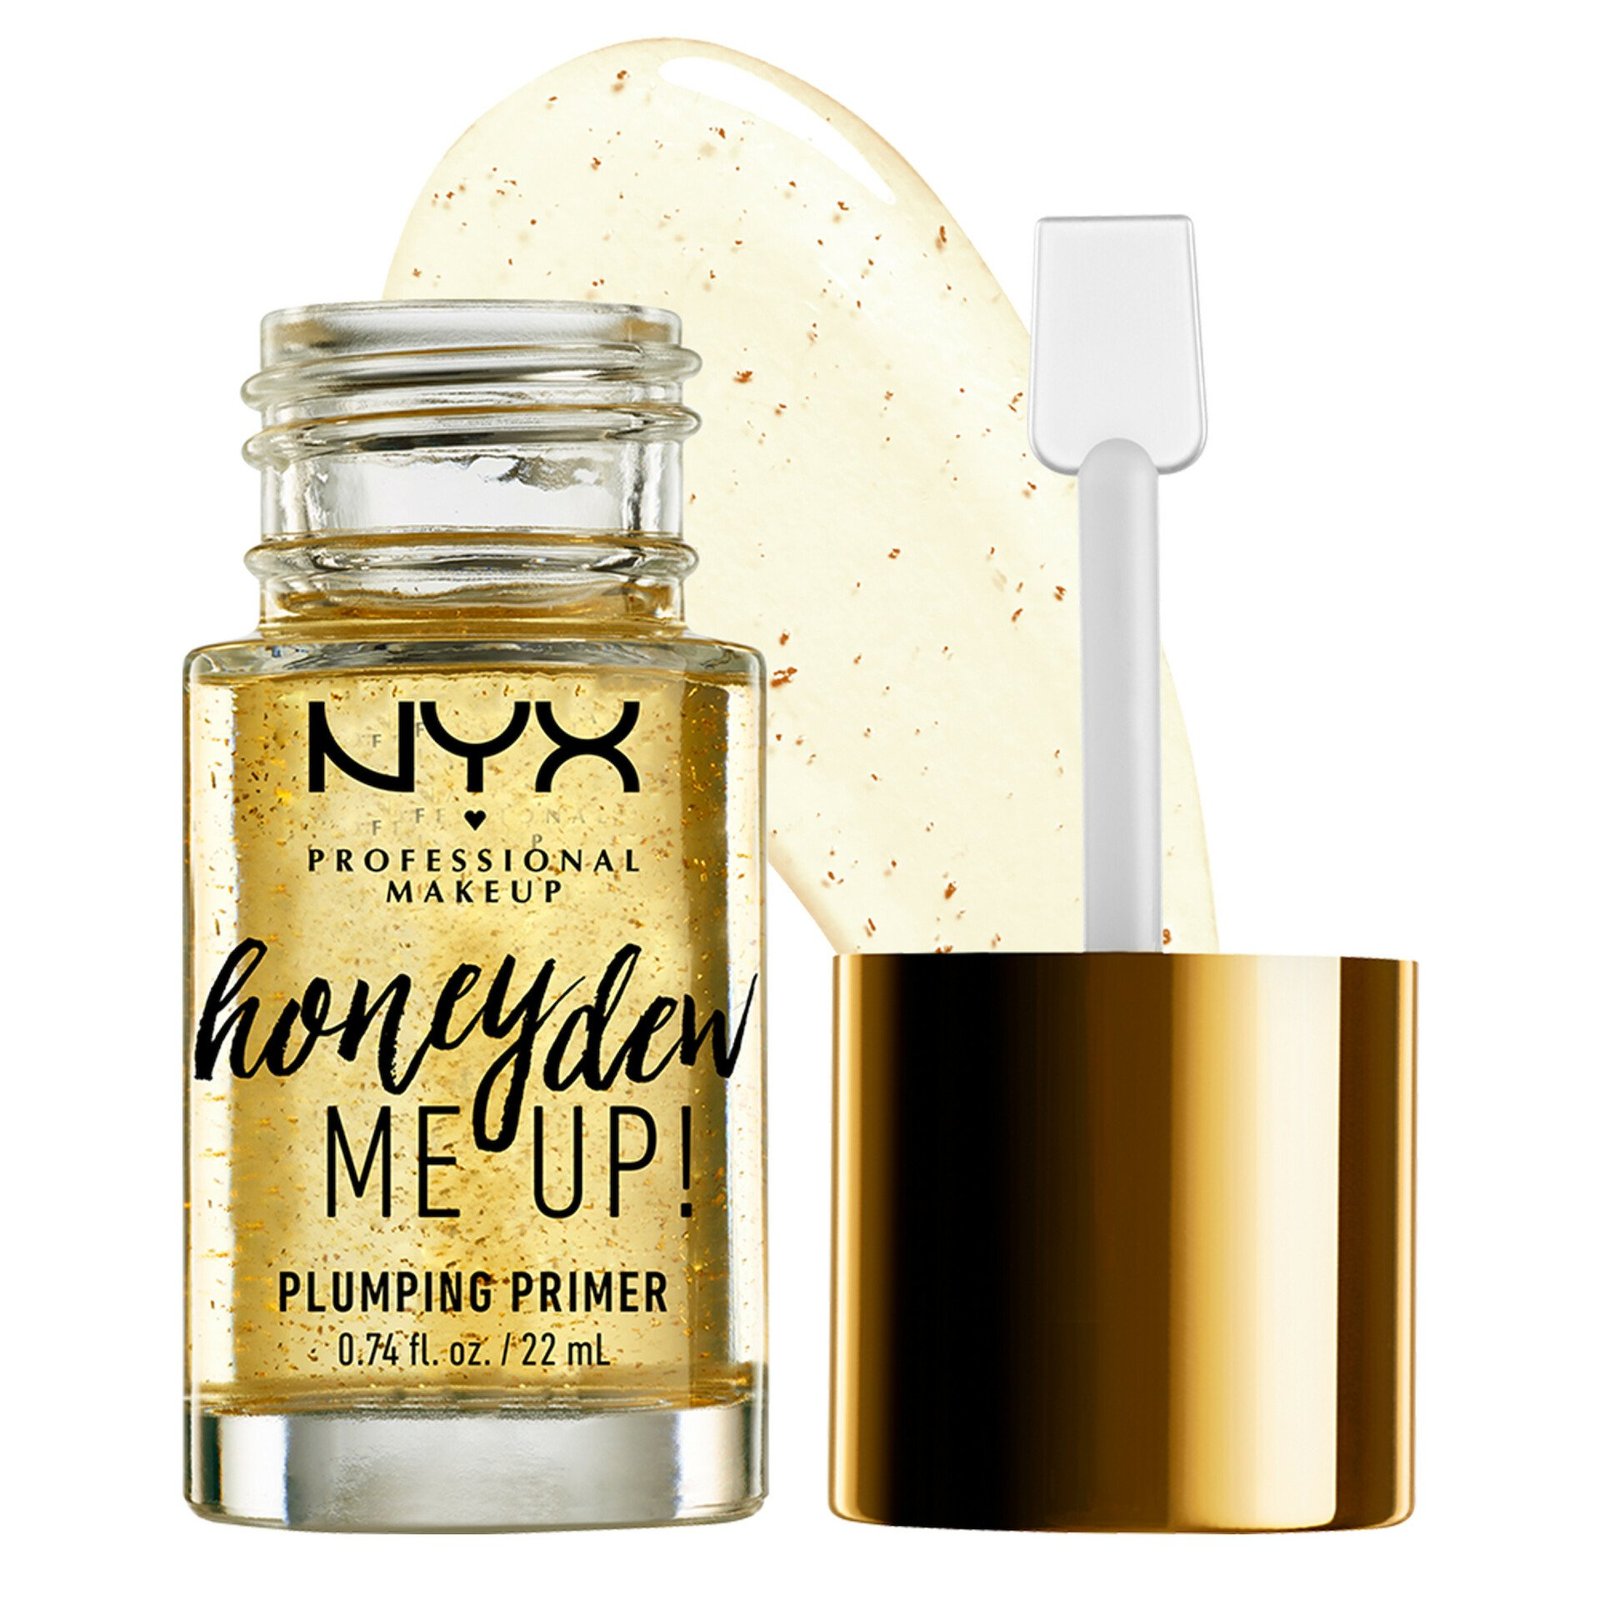 NYX Professional Makeup 1 Honey Dew Me Up 22 ml